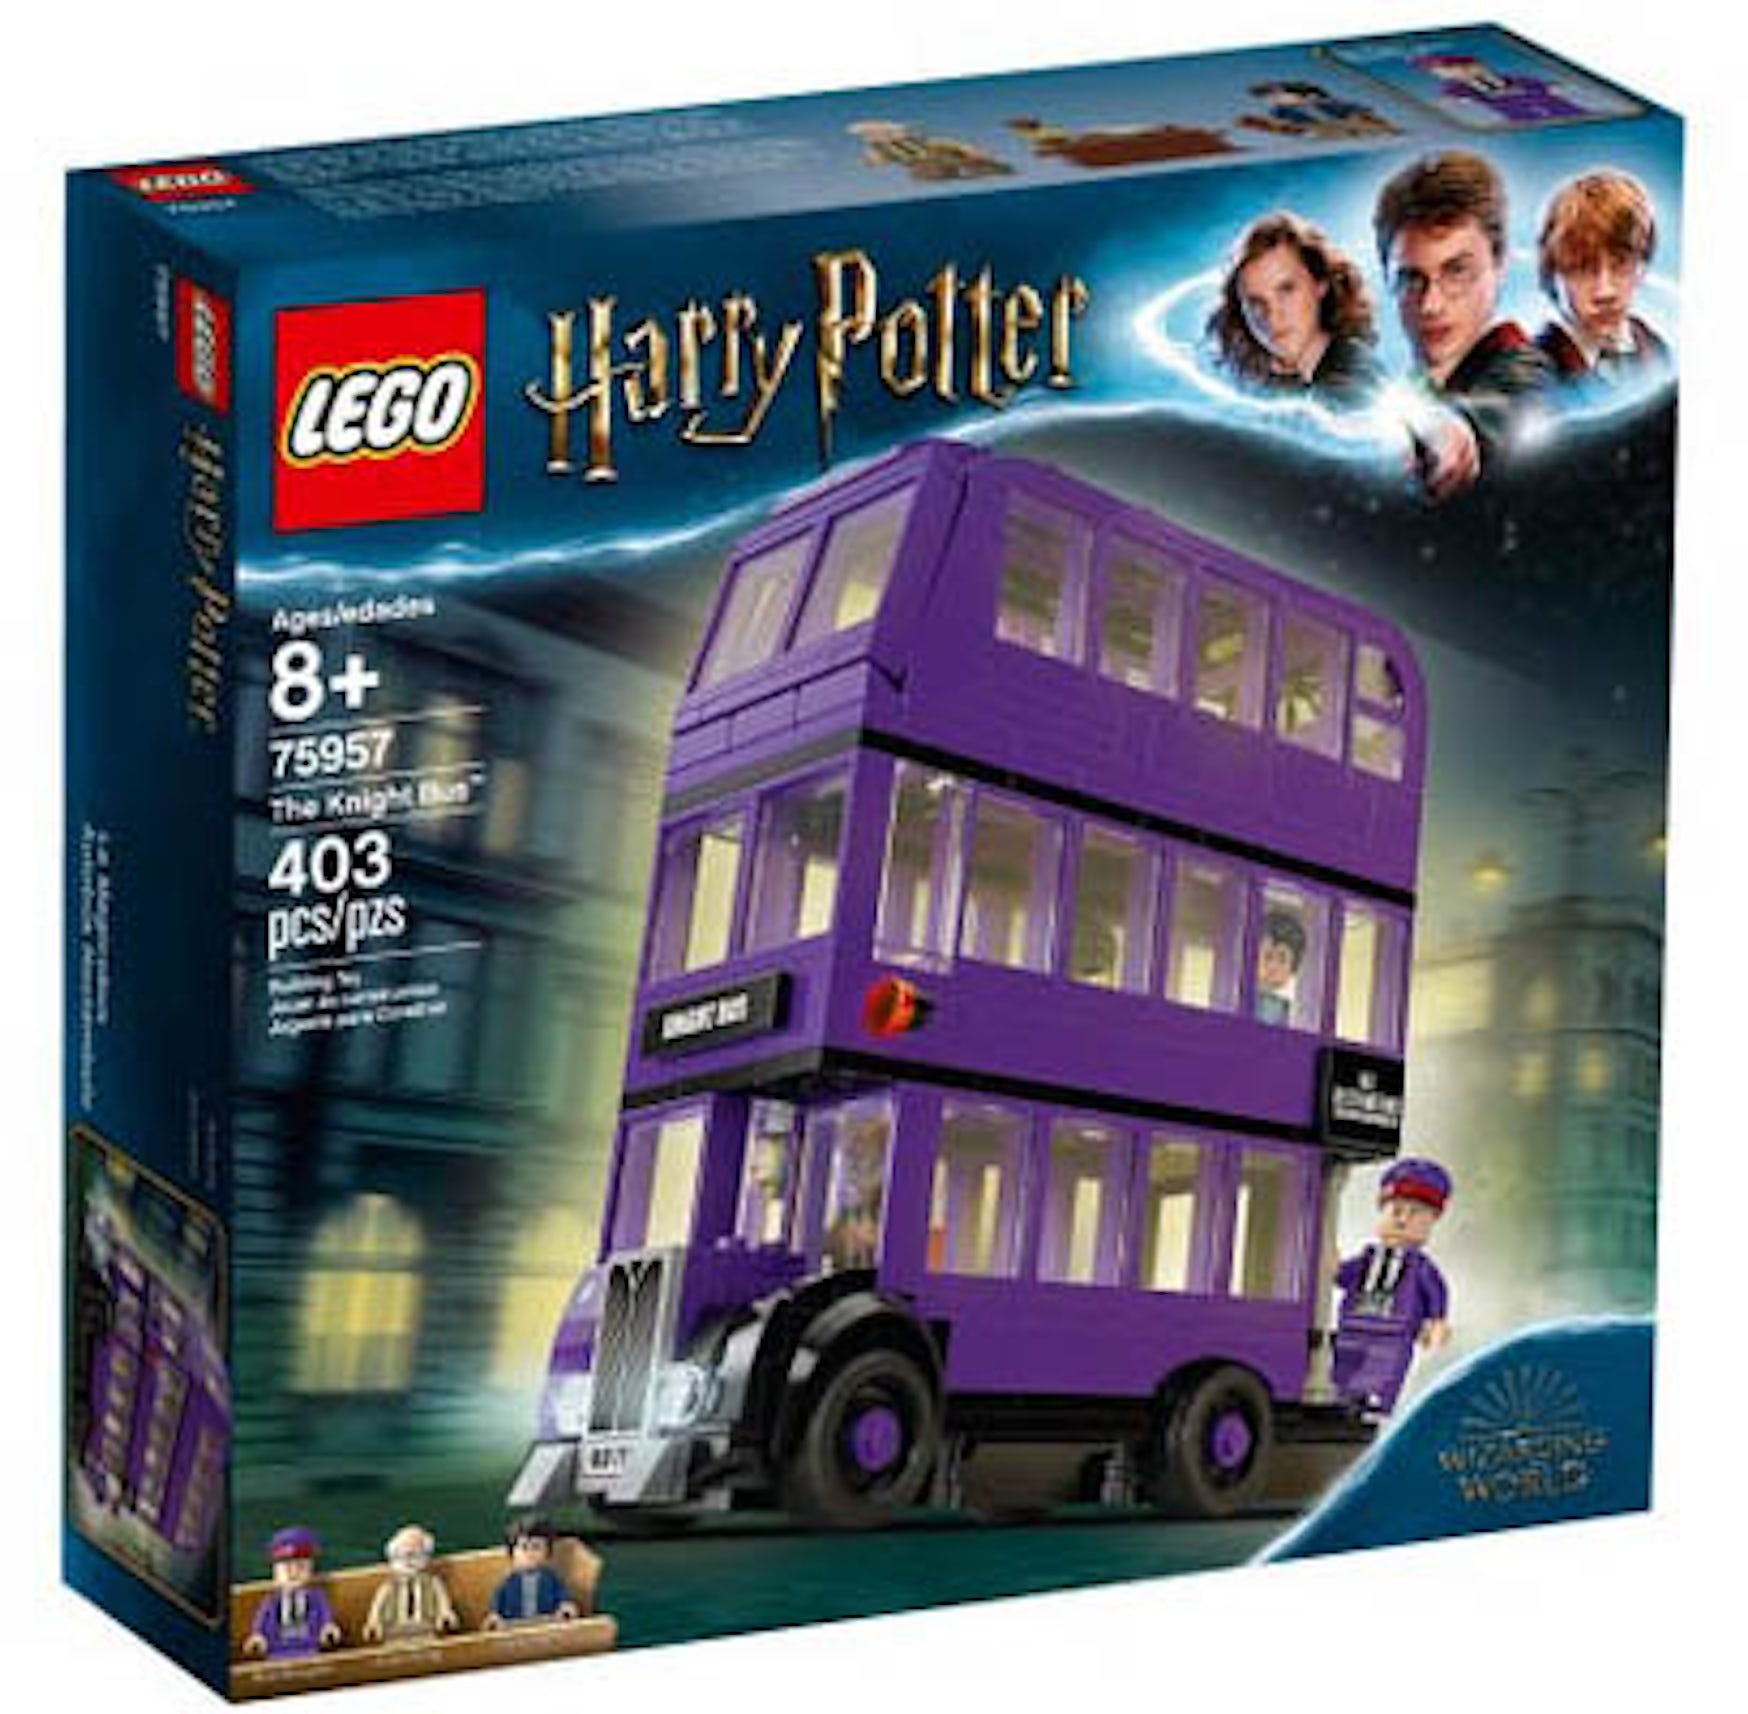 Uk bus  Playmobil, Playmobil sets, Lego city sets